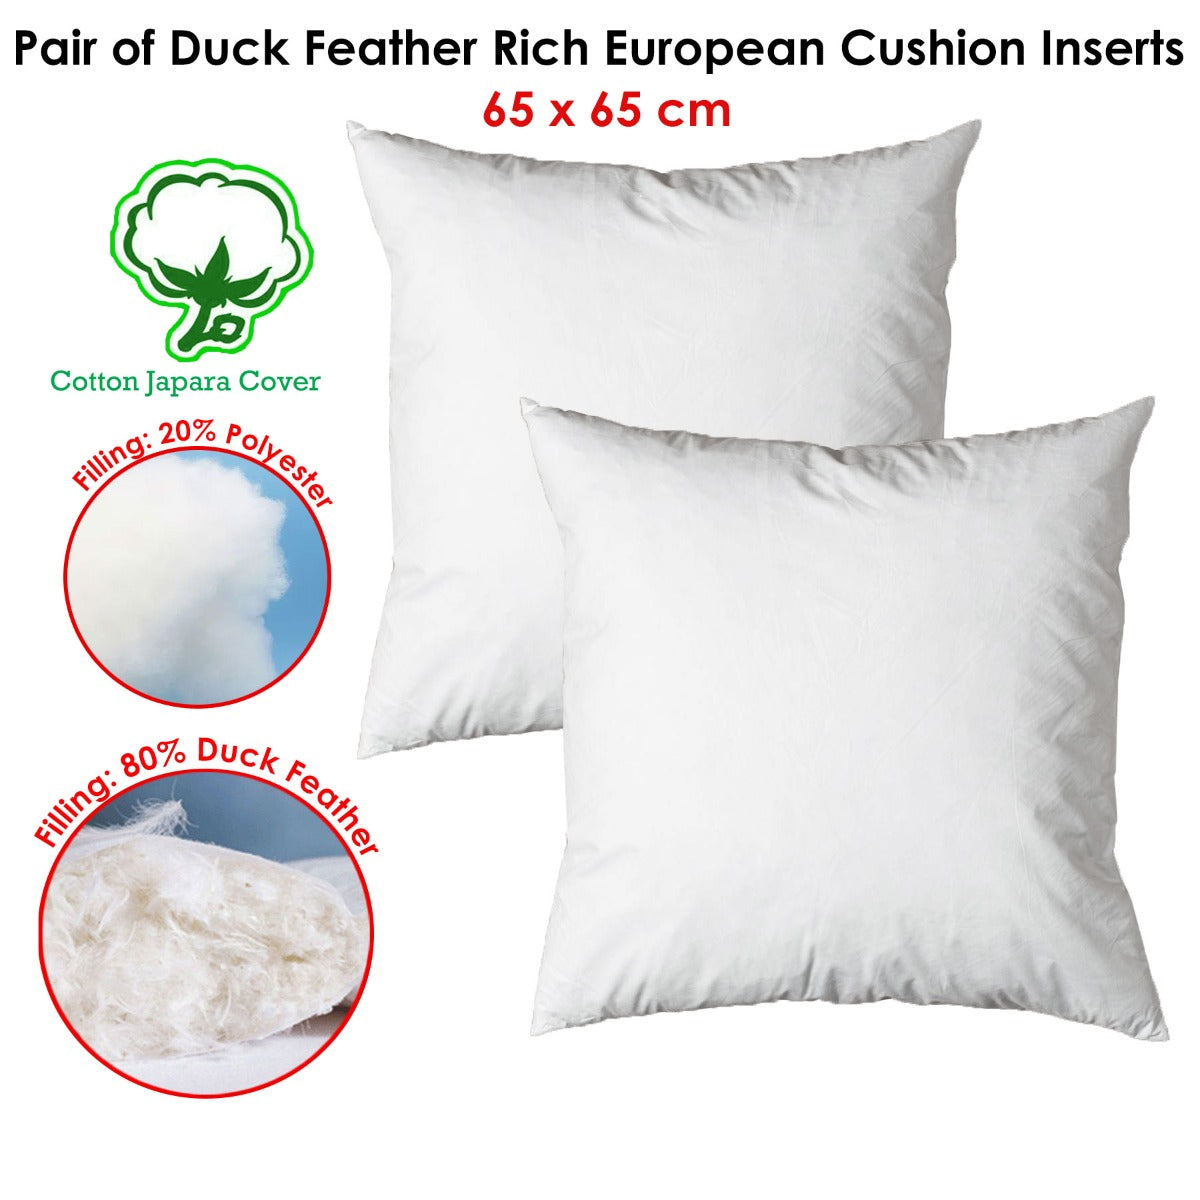 Pair of Duck Feather Rich Fill European Cushion Inserter 65 x 65 cm